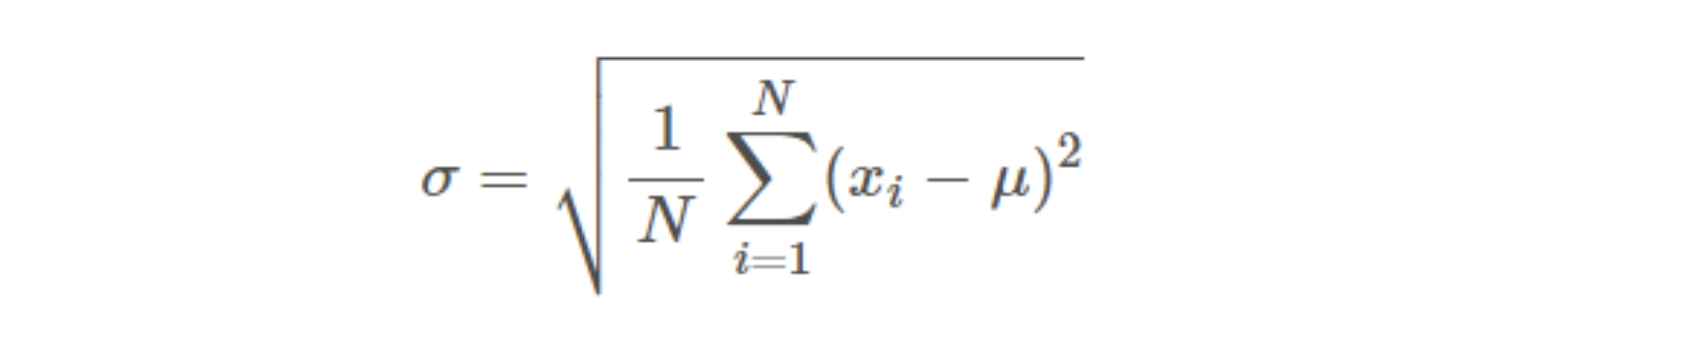 The mathematical formula for standard deviation